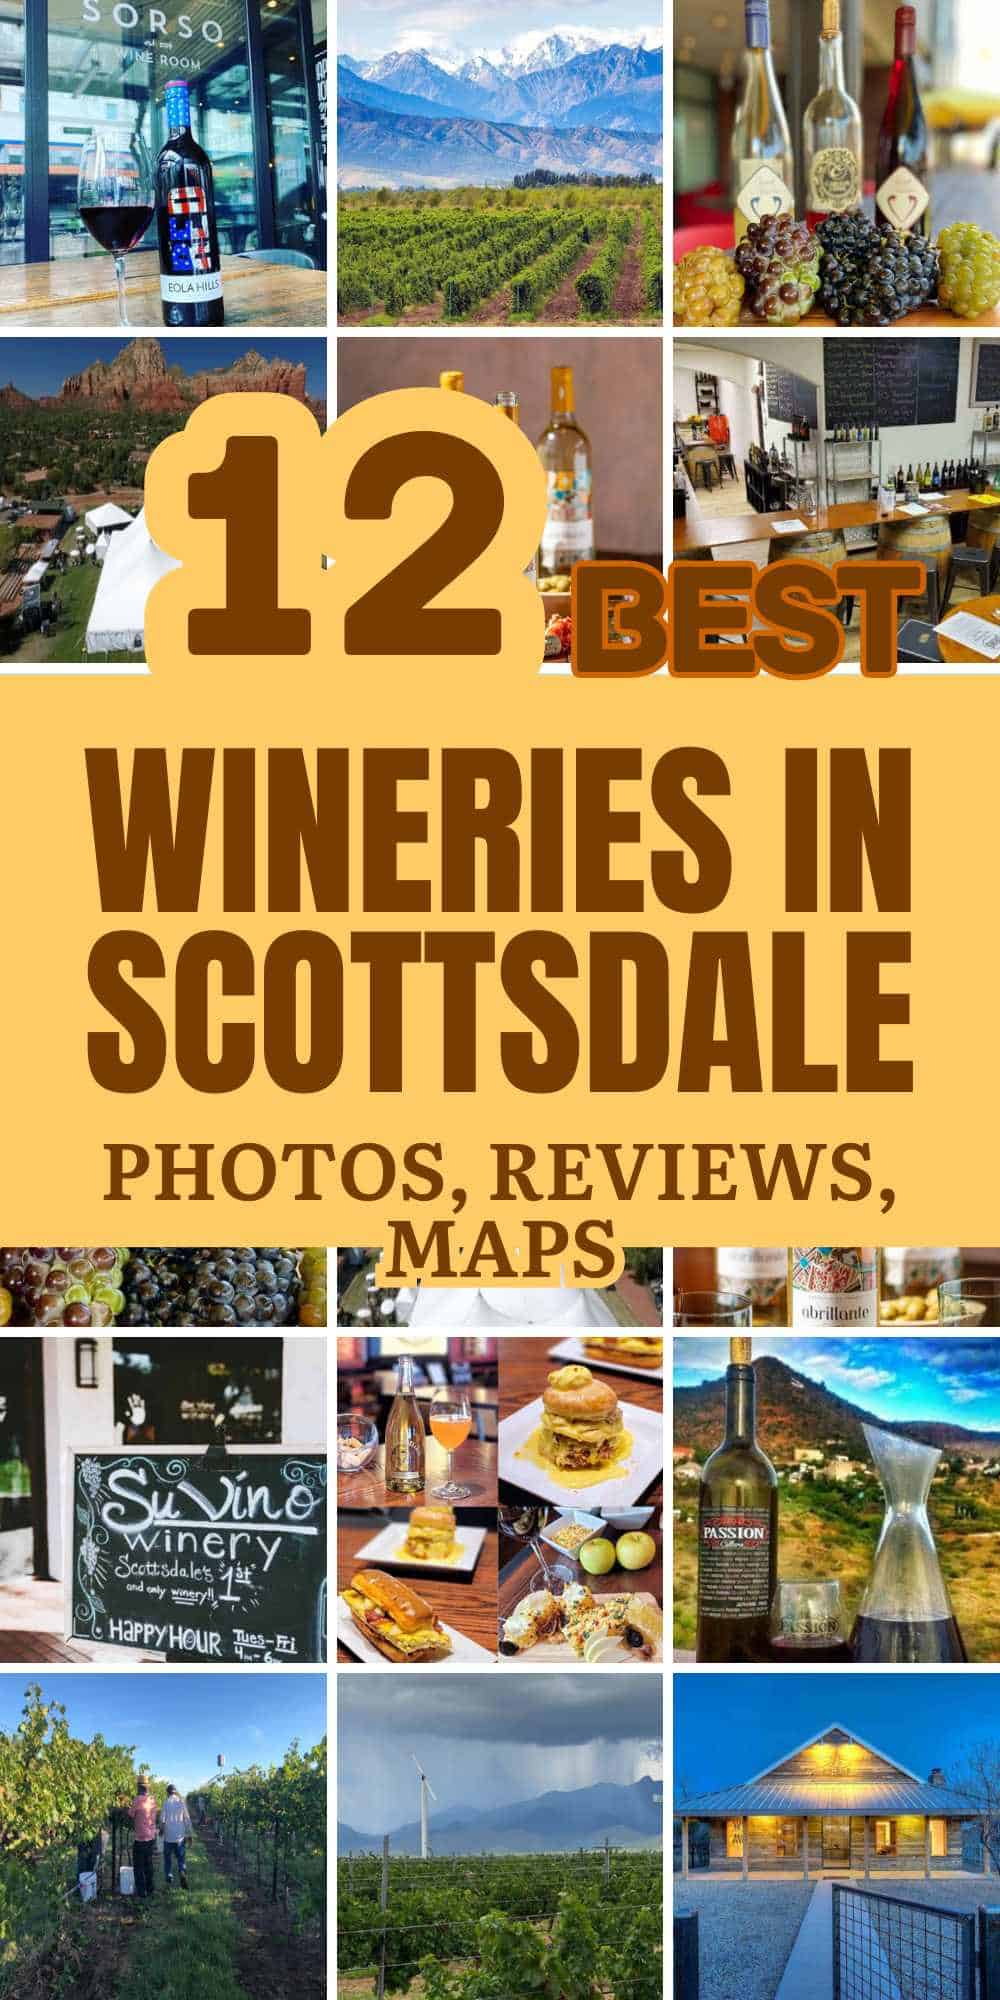 Best Wineries in Scottsdale